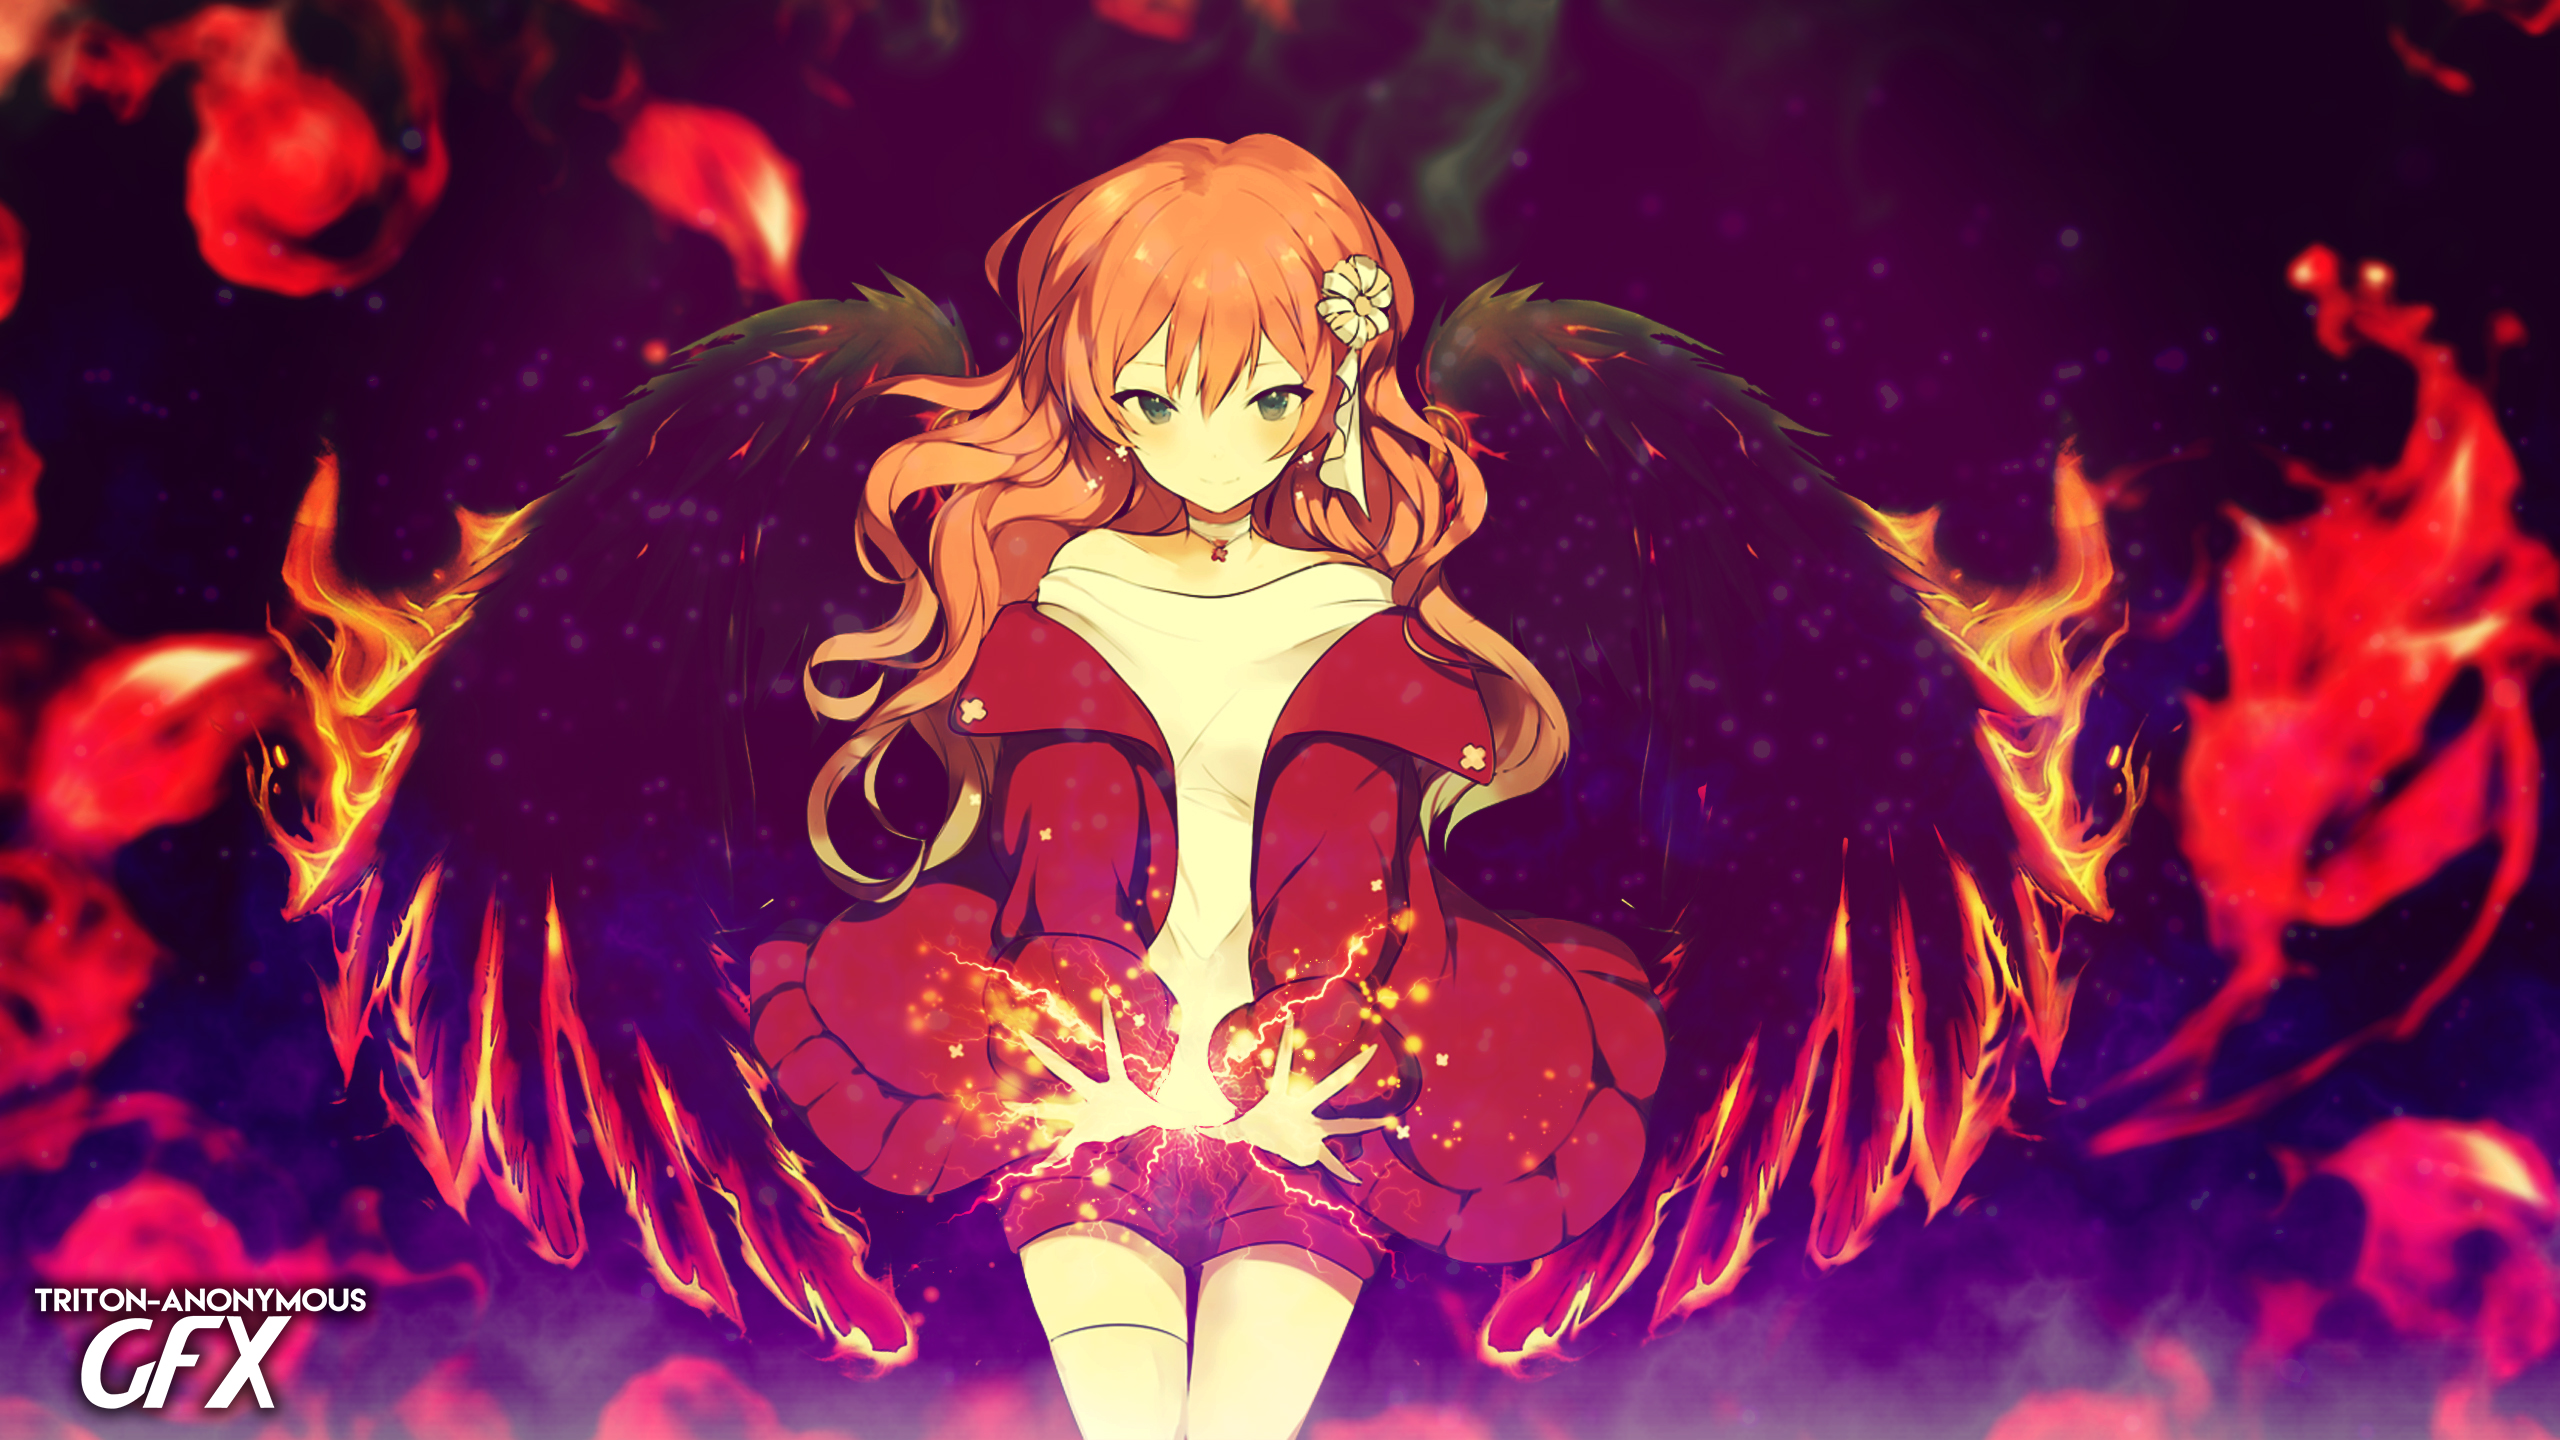 Anime Fire Angel Girl Wallpaper HD by TritonAnonymousGFX on DeviantArt